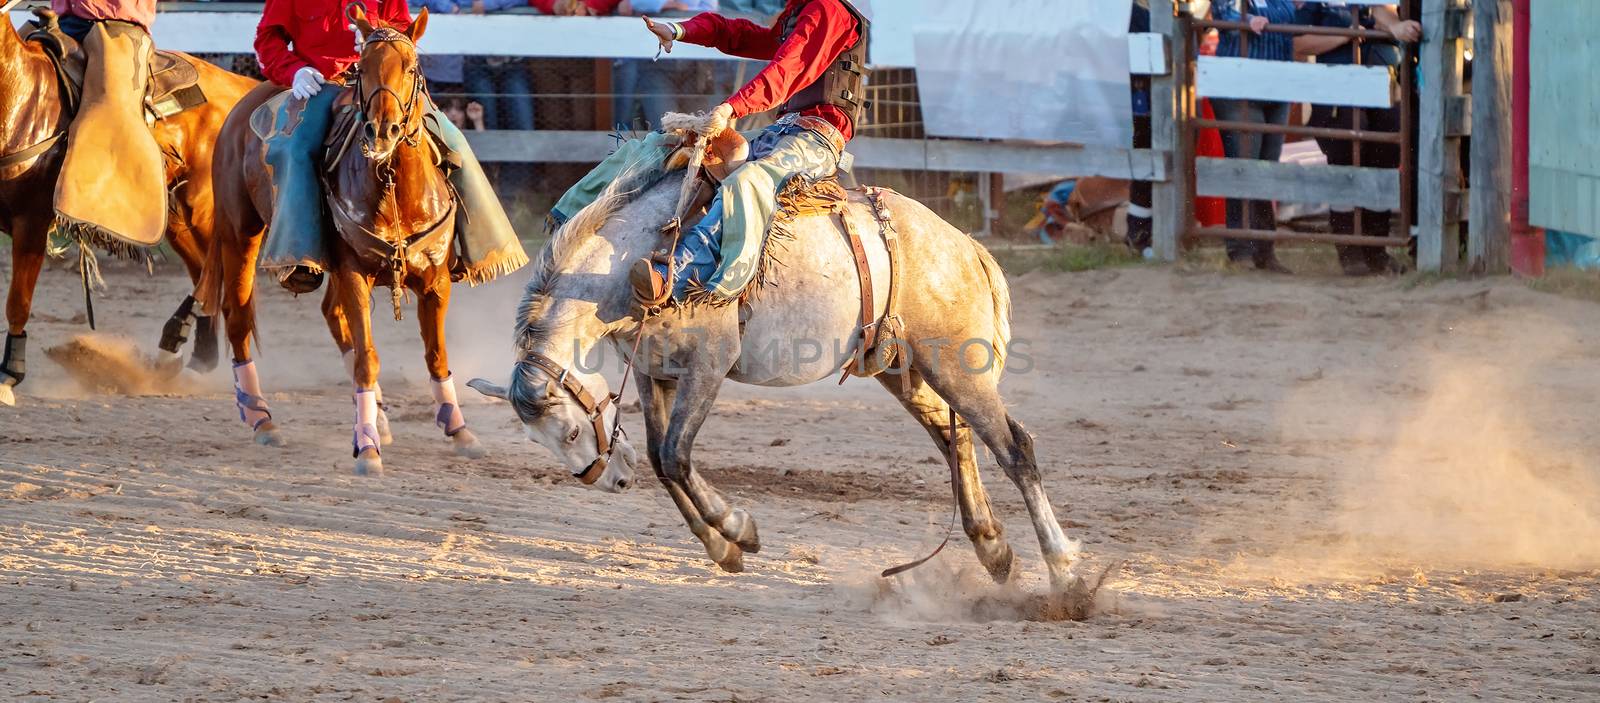 Cowboy Rides Bucking Horse by 	JacksonStock